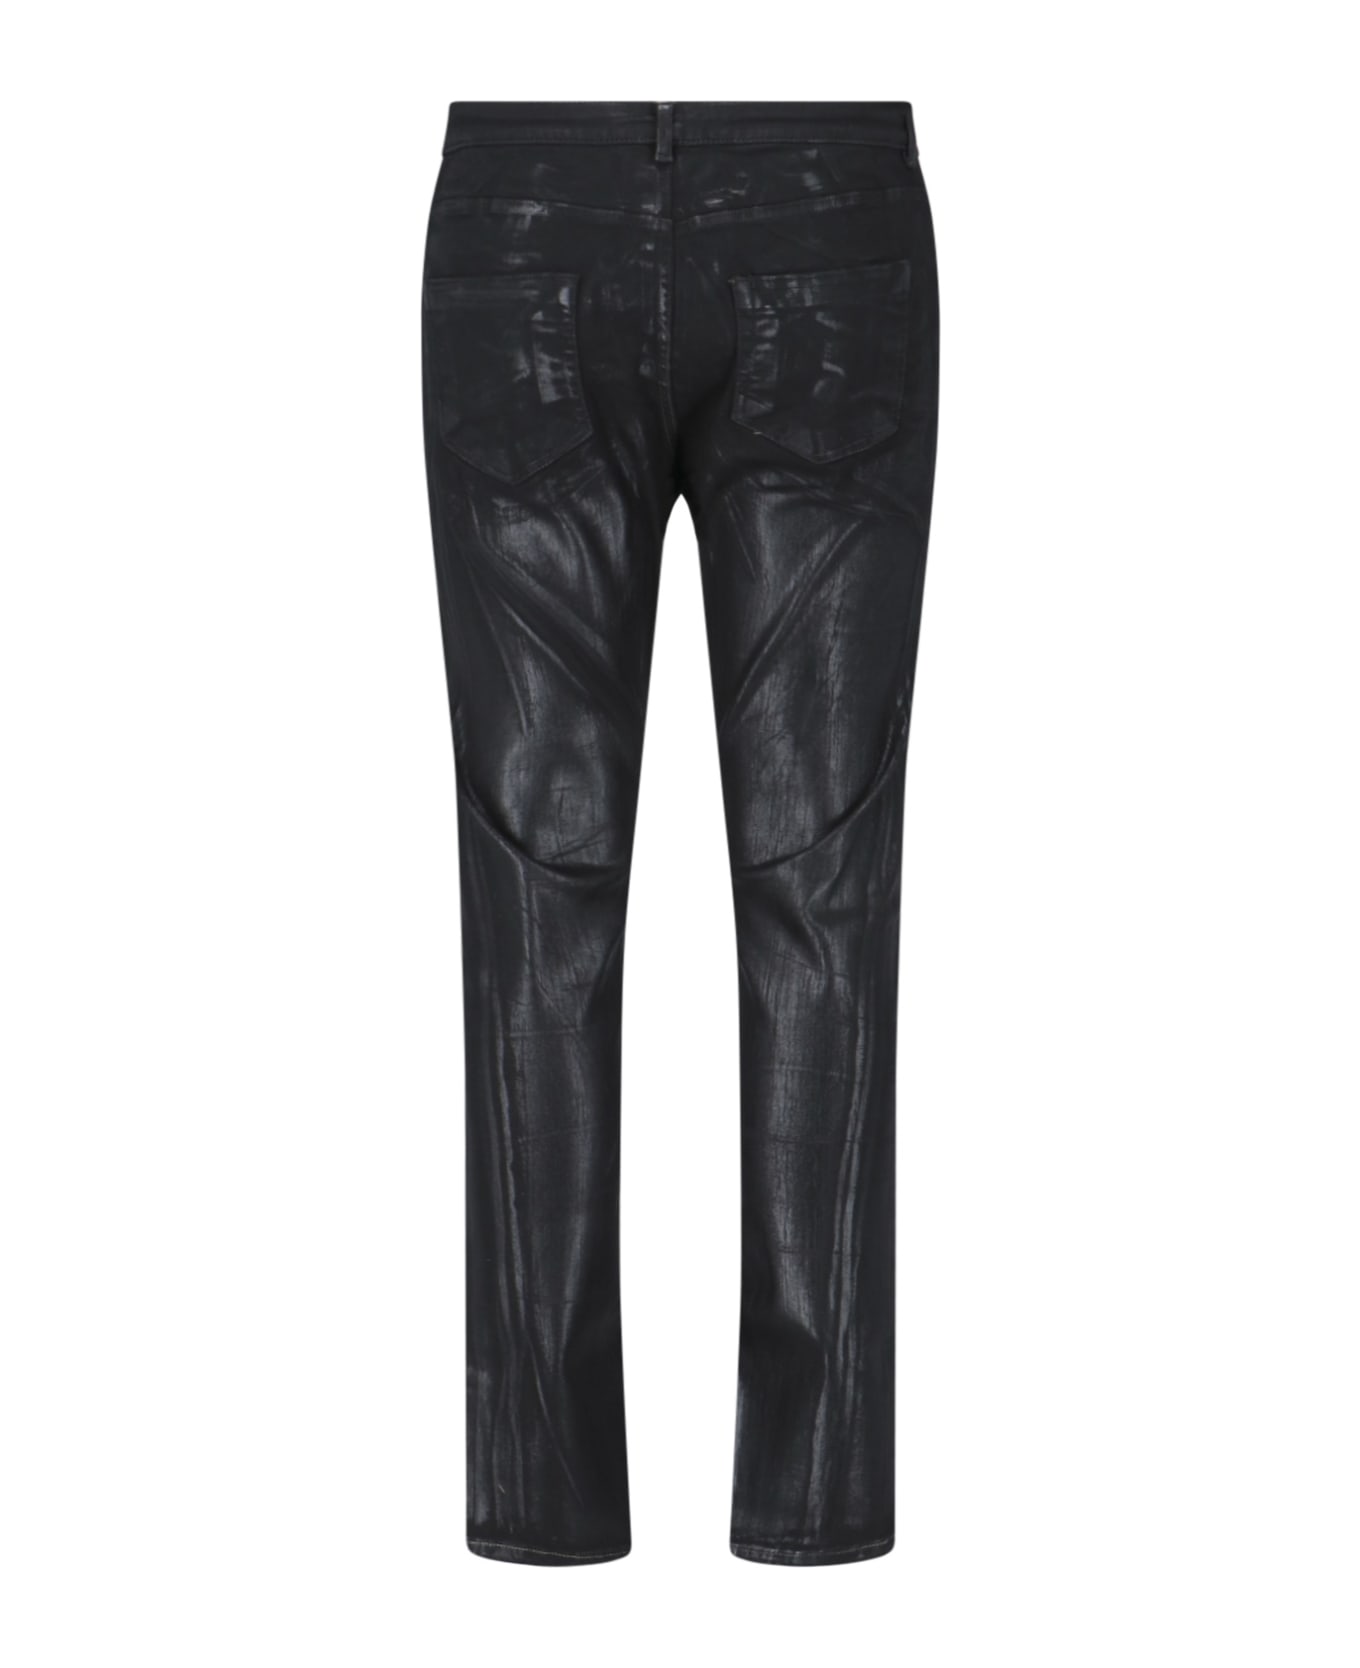 DRKSHDW Slim Jeans - Black  